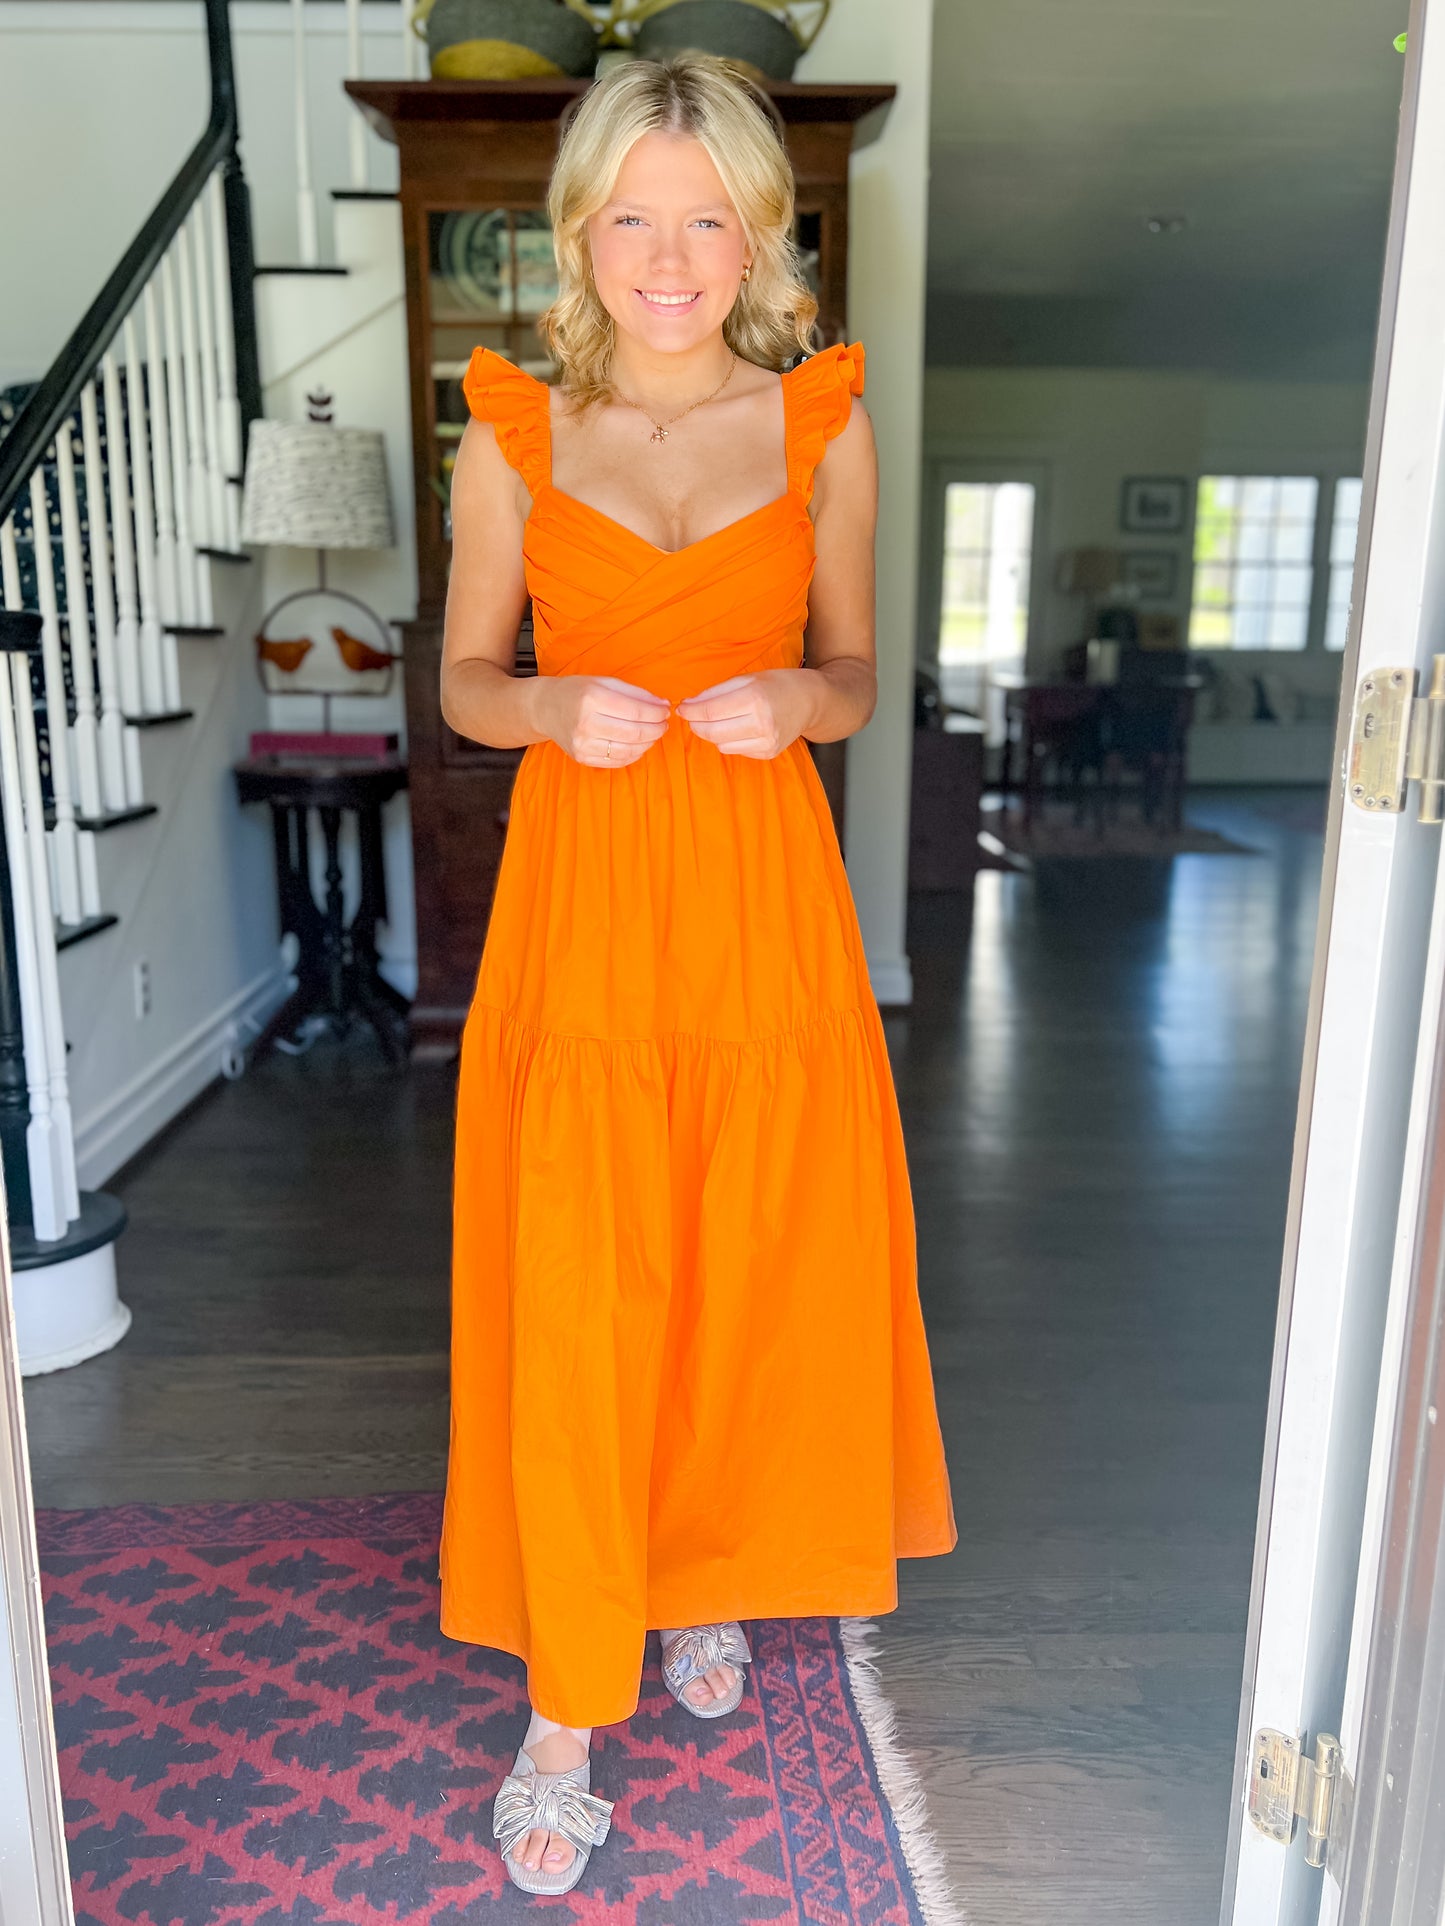 Clementine dress